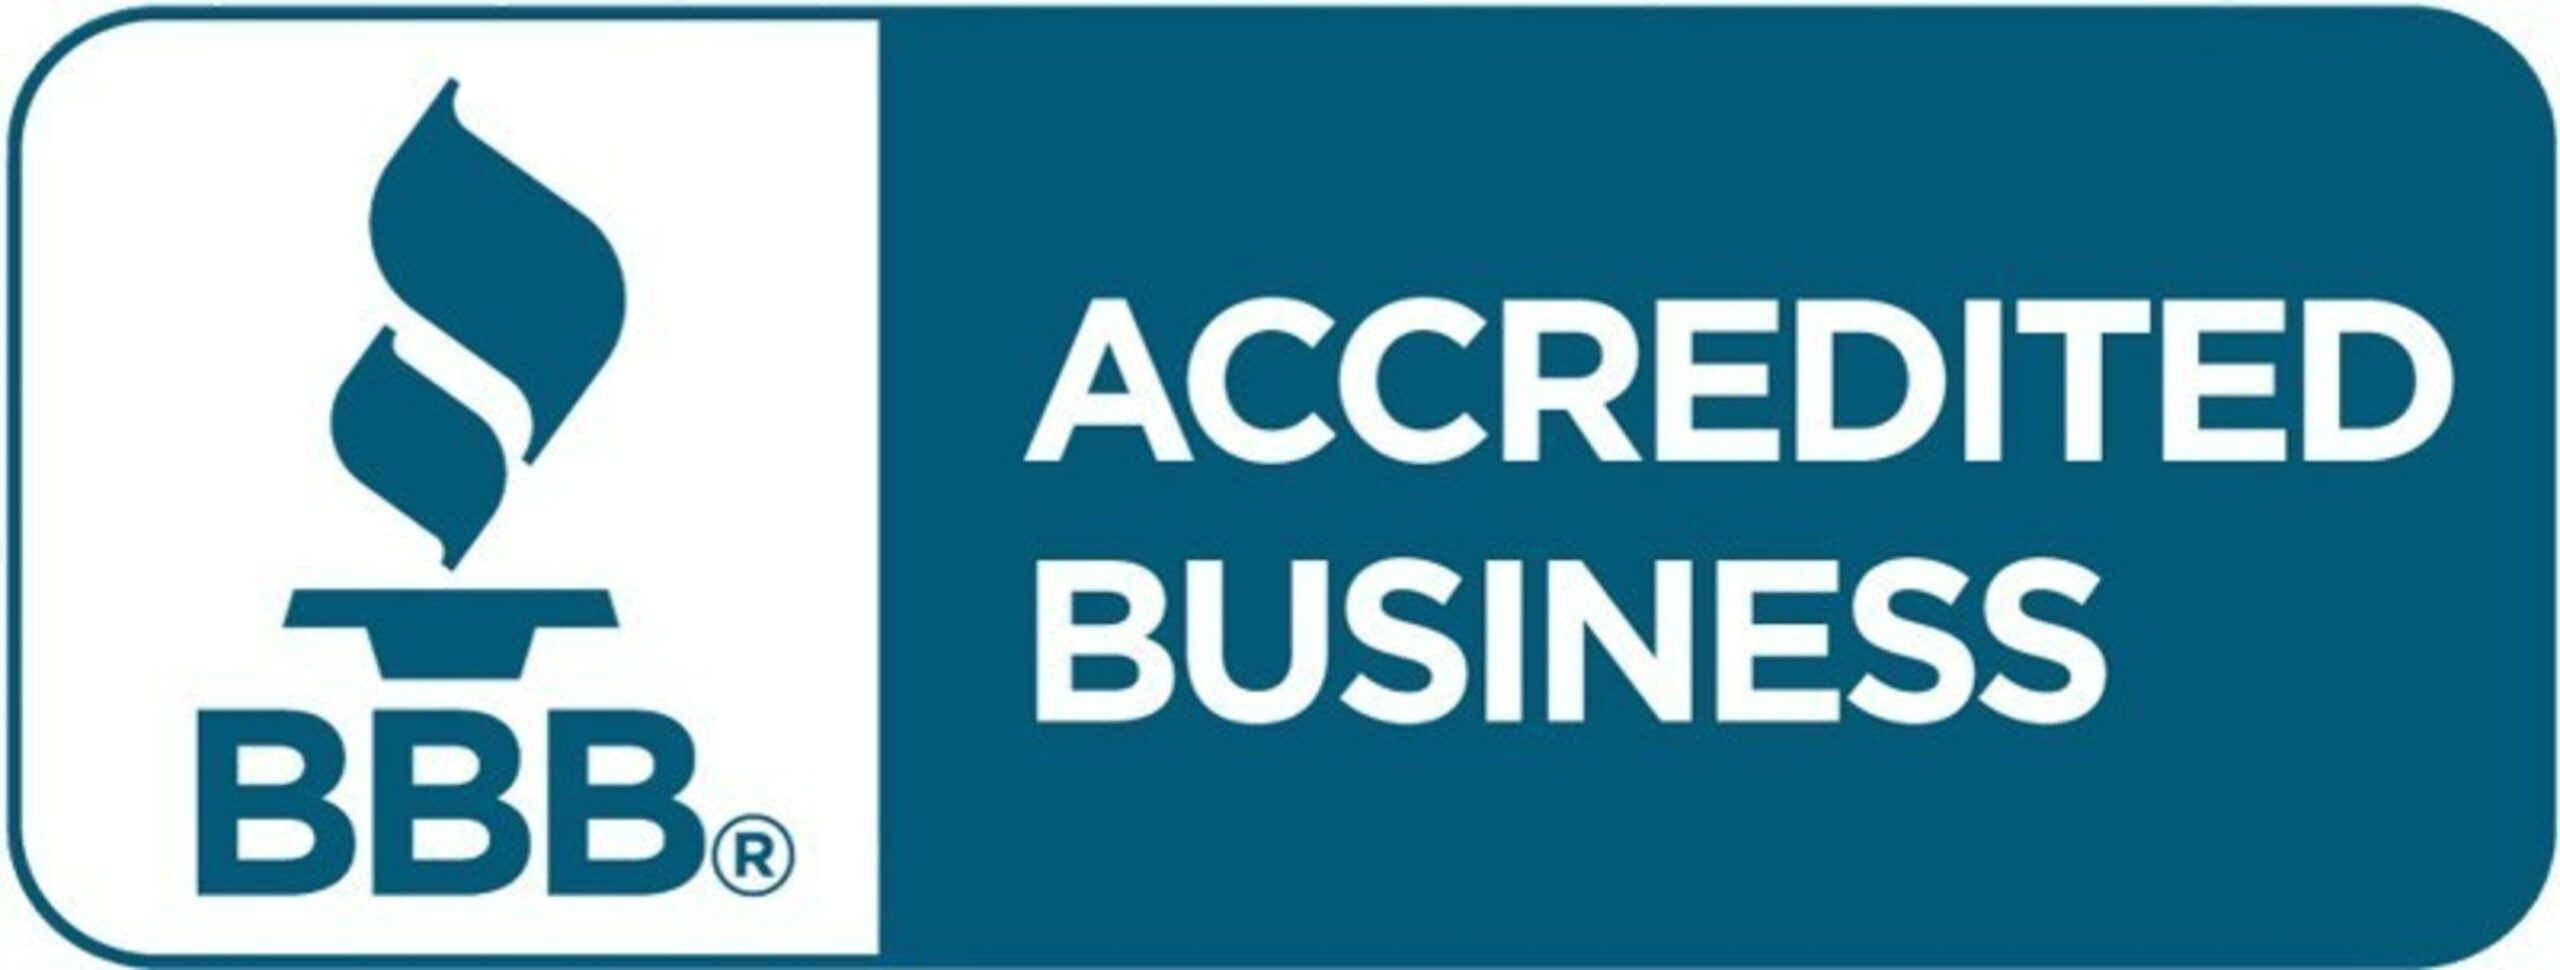 BBB Accredited Business (PRNewsFoto/Beacon Funding Corporation)